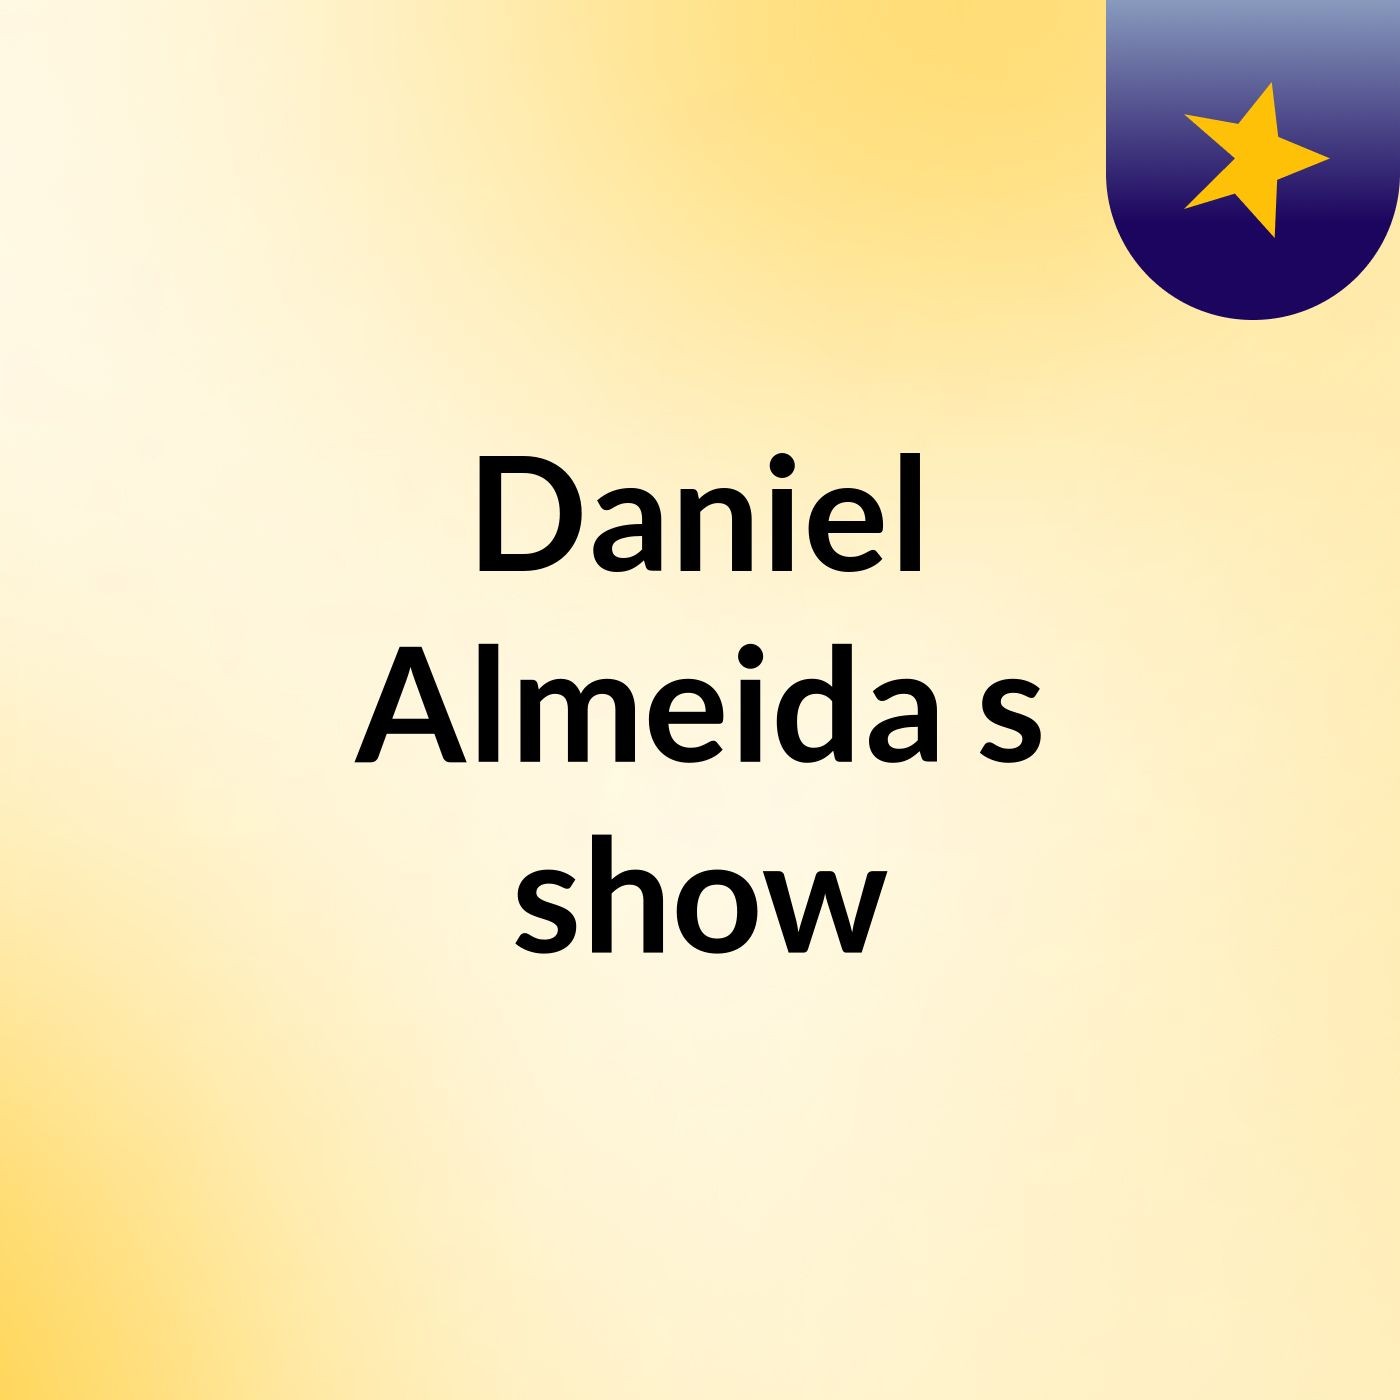 Daniel Almeida's show